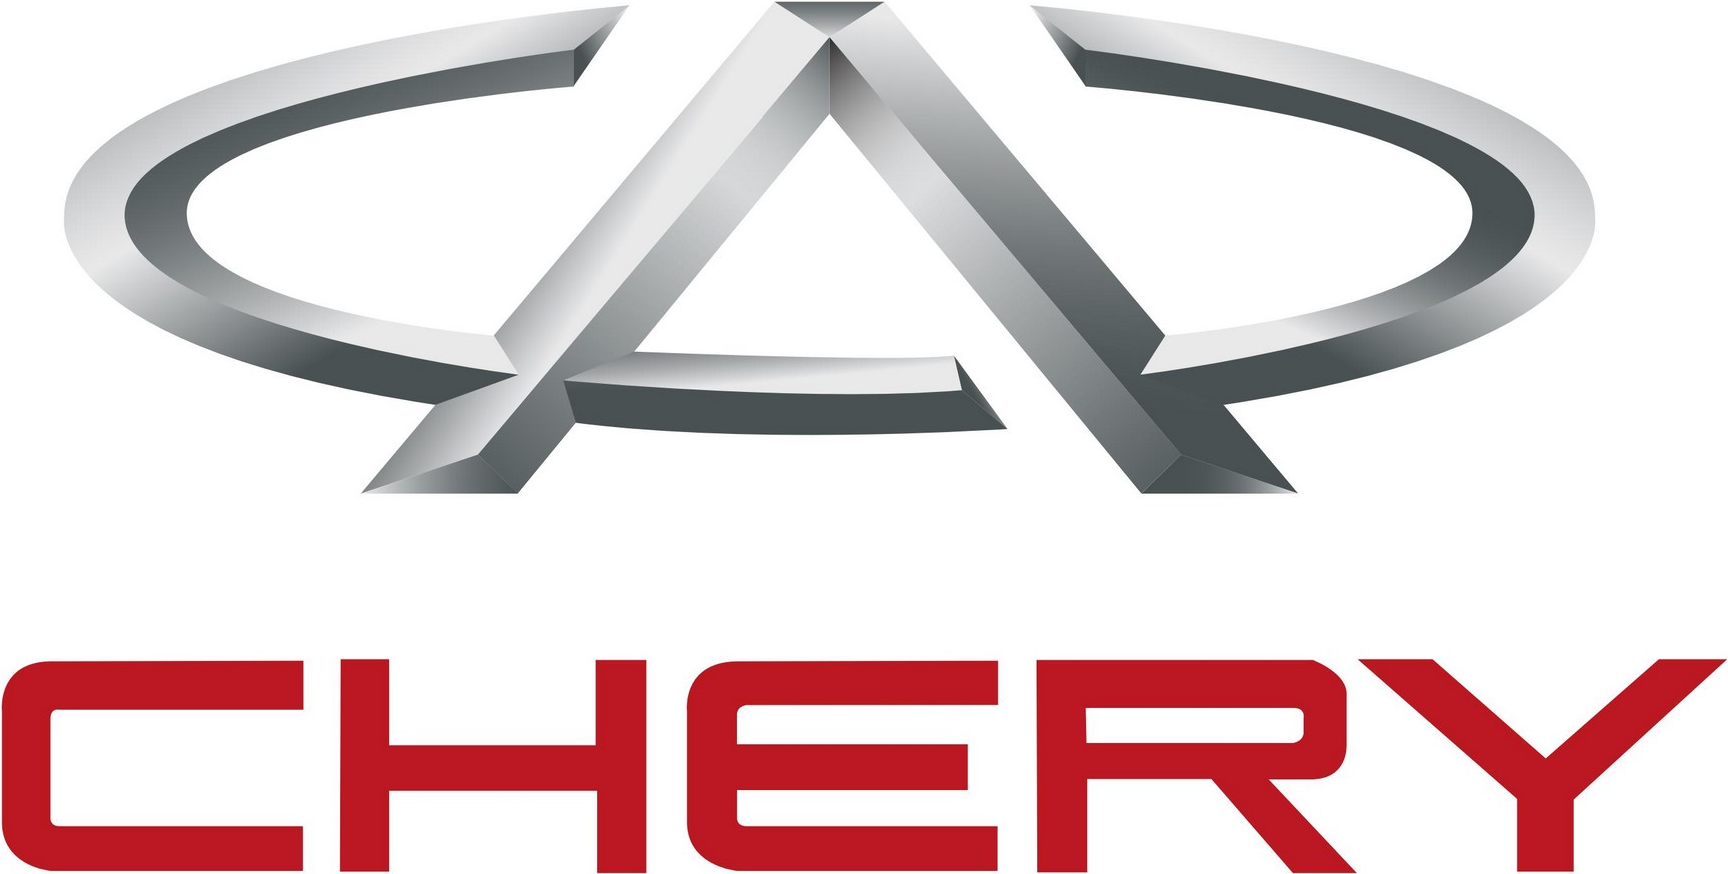 cherry car logo